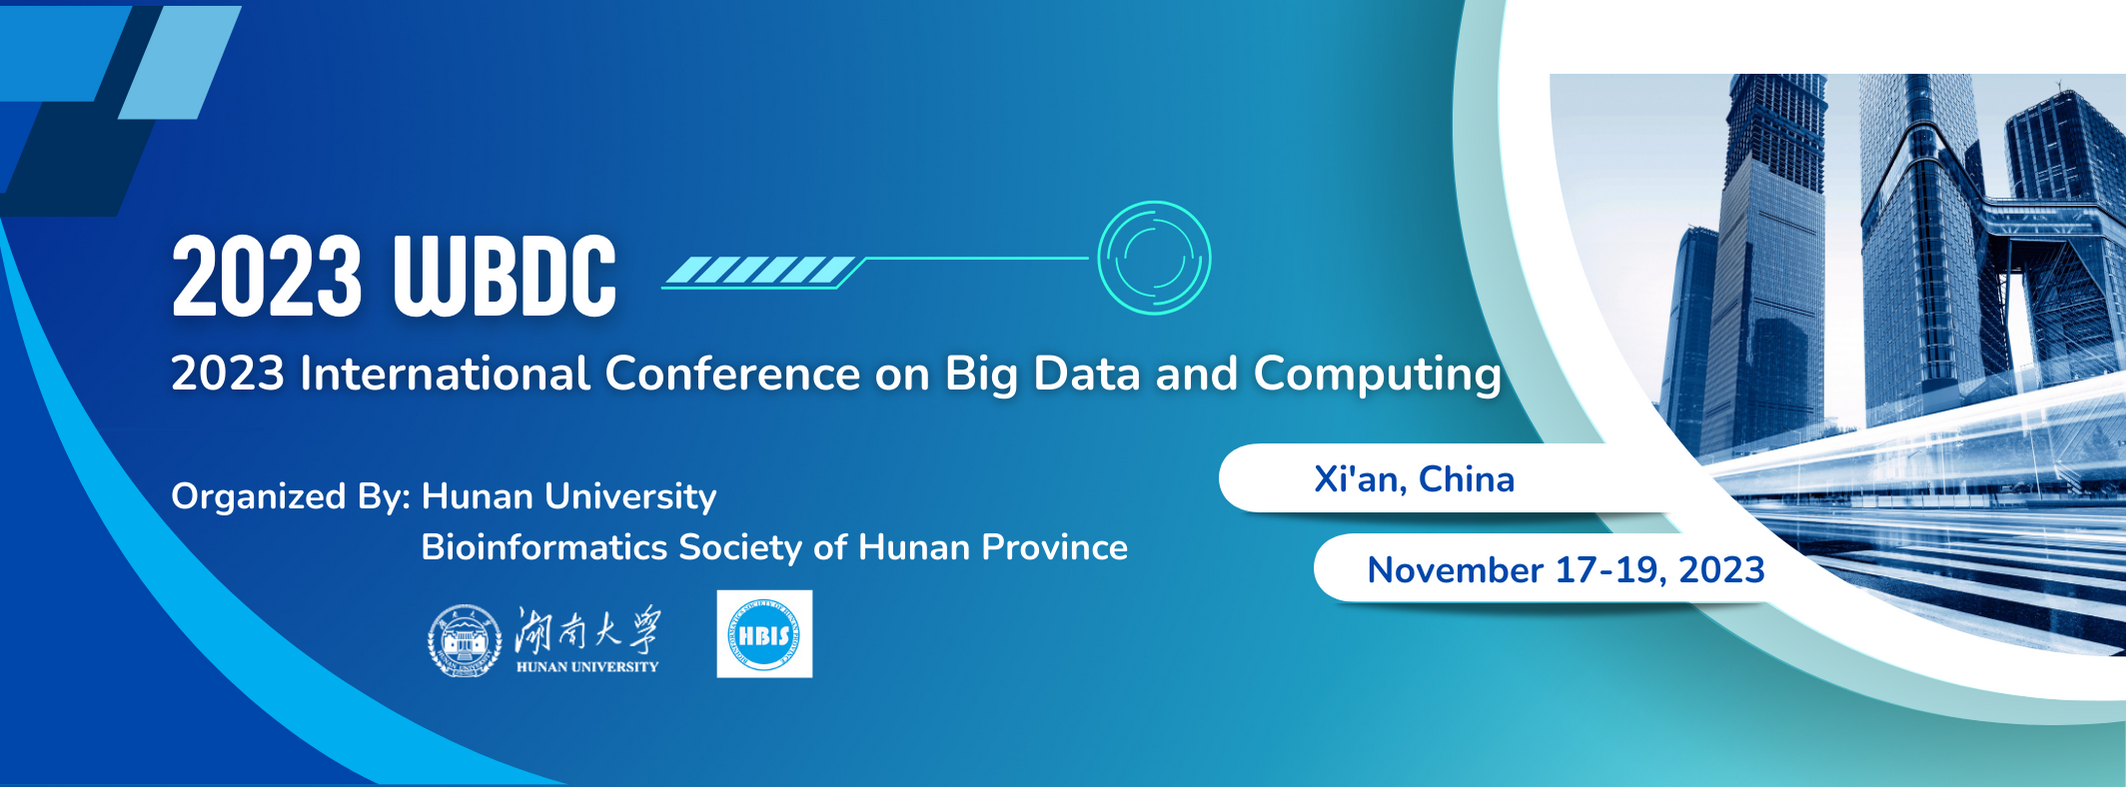 2023 International Conference on Big Data and Computing (WBDC 2023), Xi'an, Shaanxi, China